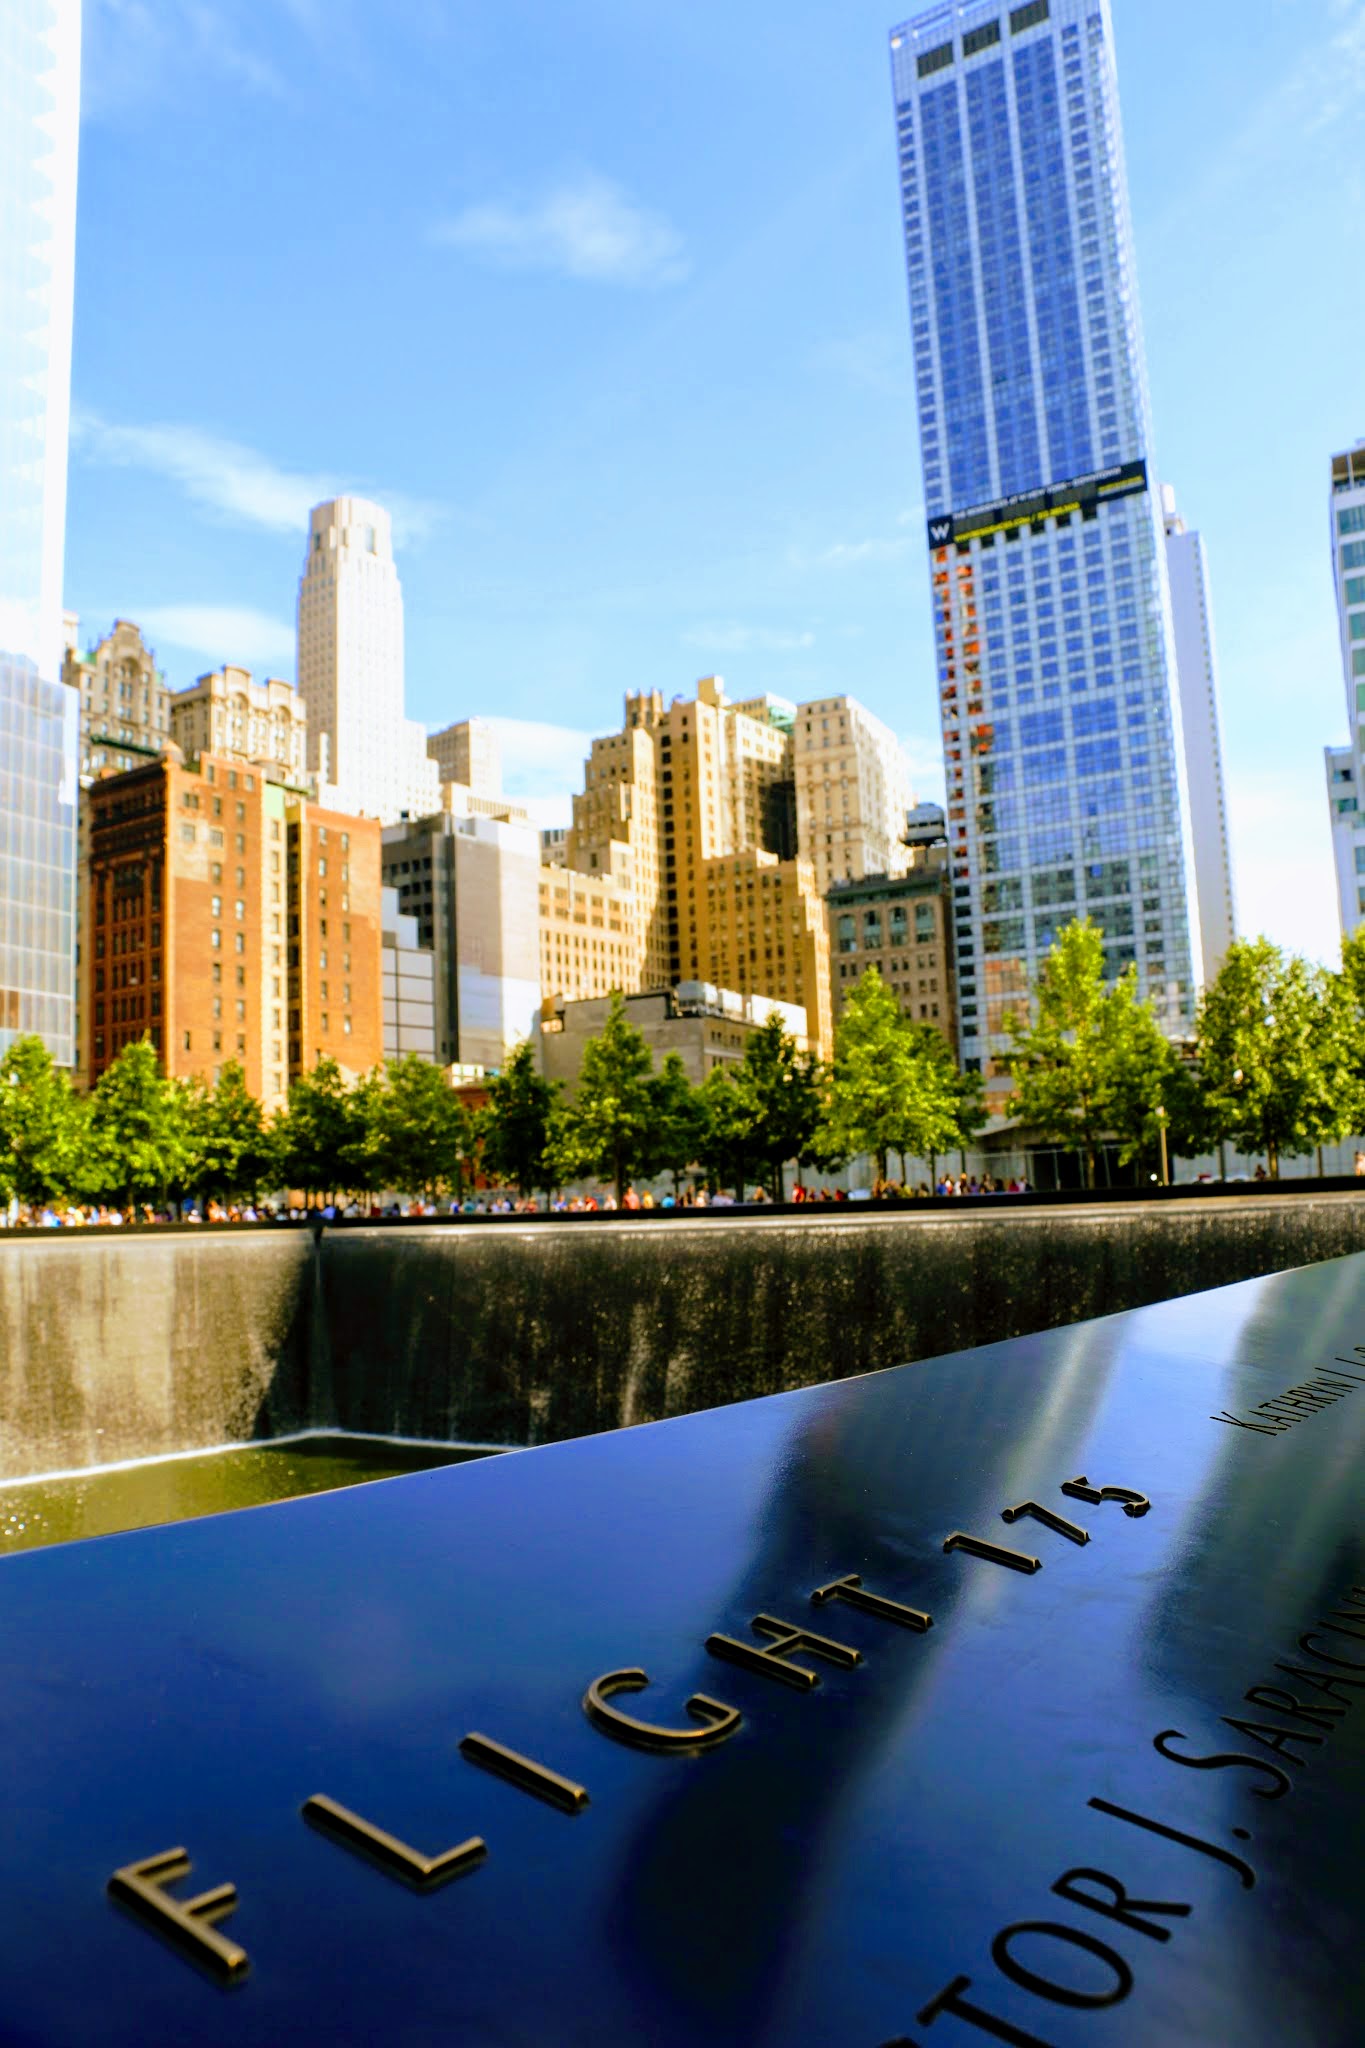 911 monument New York - Flight 175